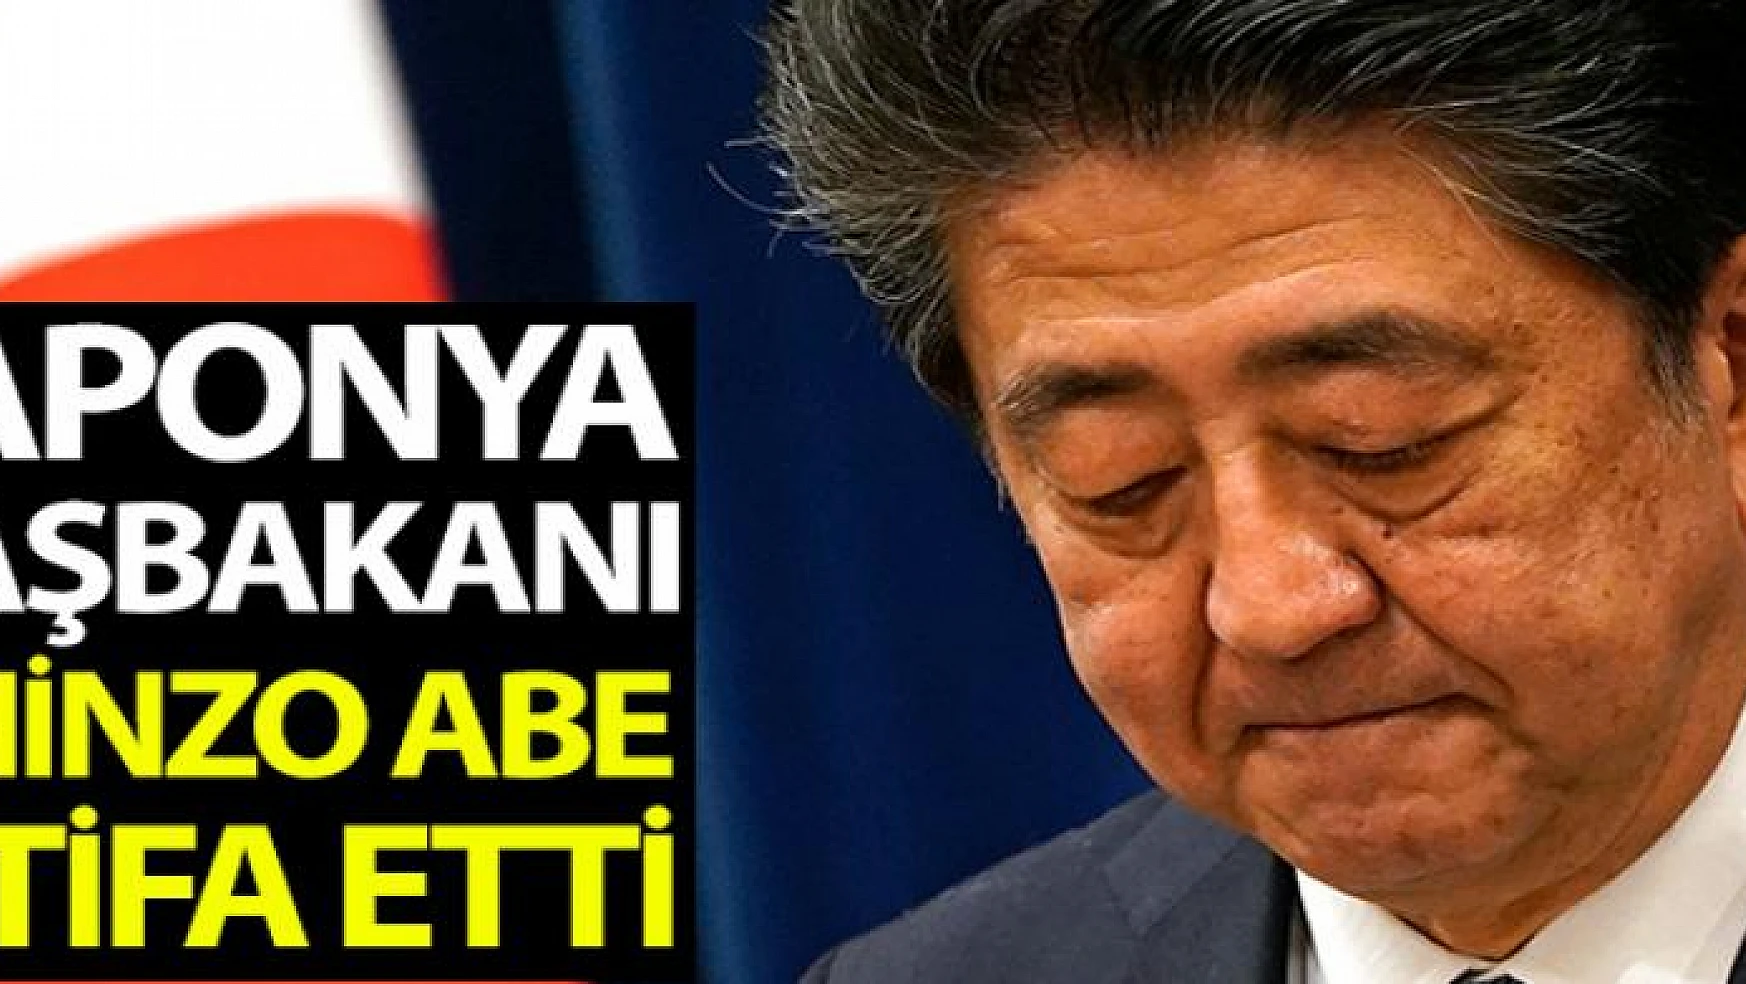 Japonya Başbakanı Abe istifa etti